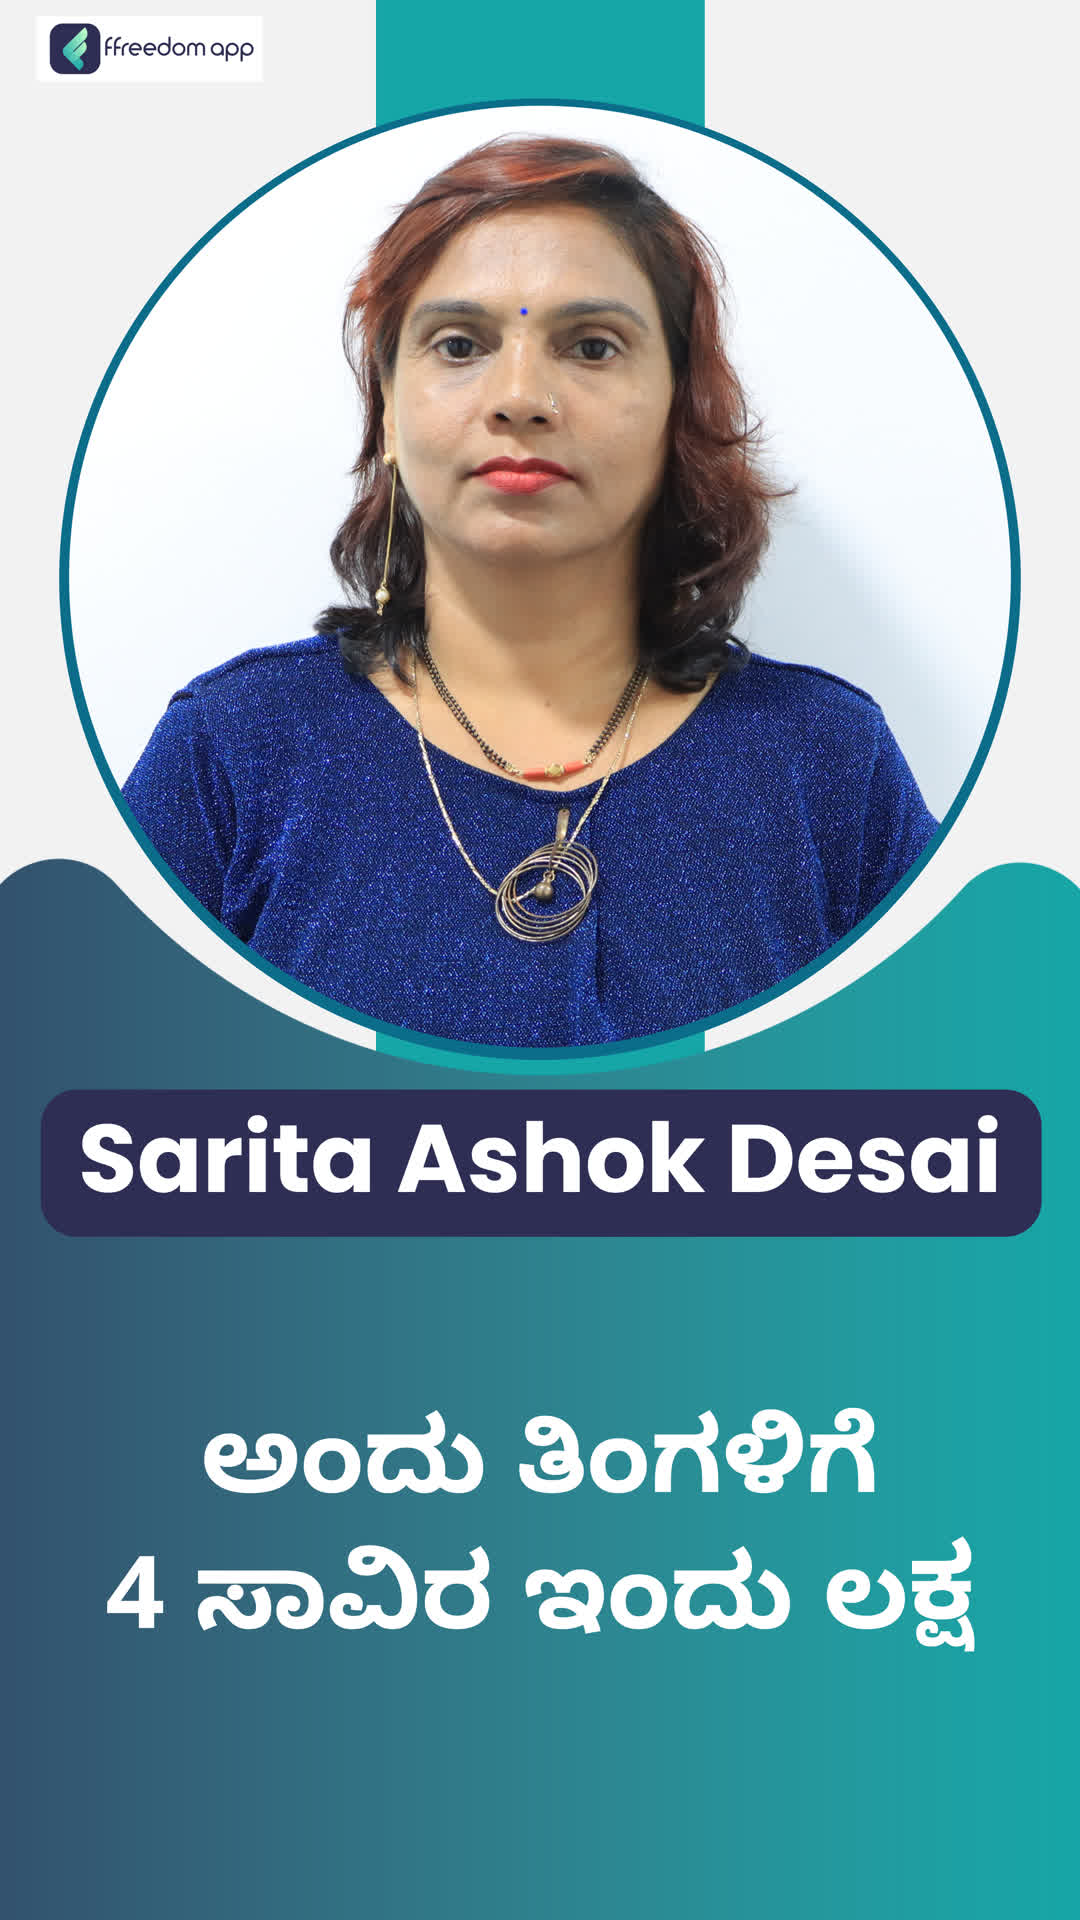 Sarita Desai's Honest Review of ffreedom app - Uttara Kannada ,Karnataka